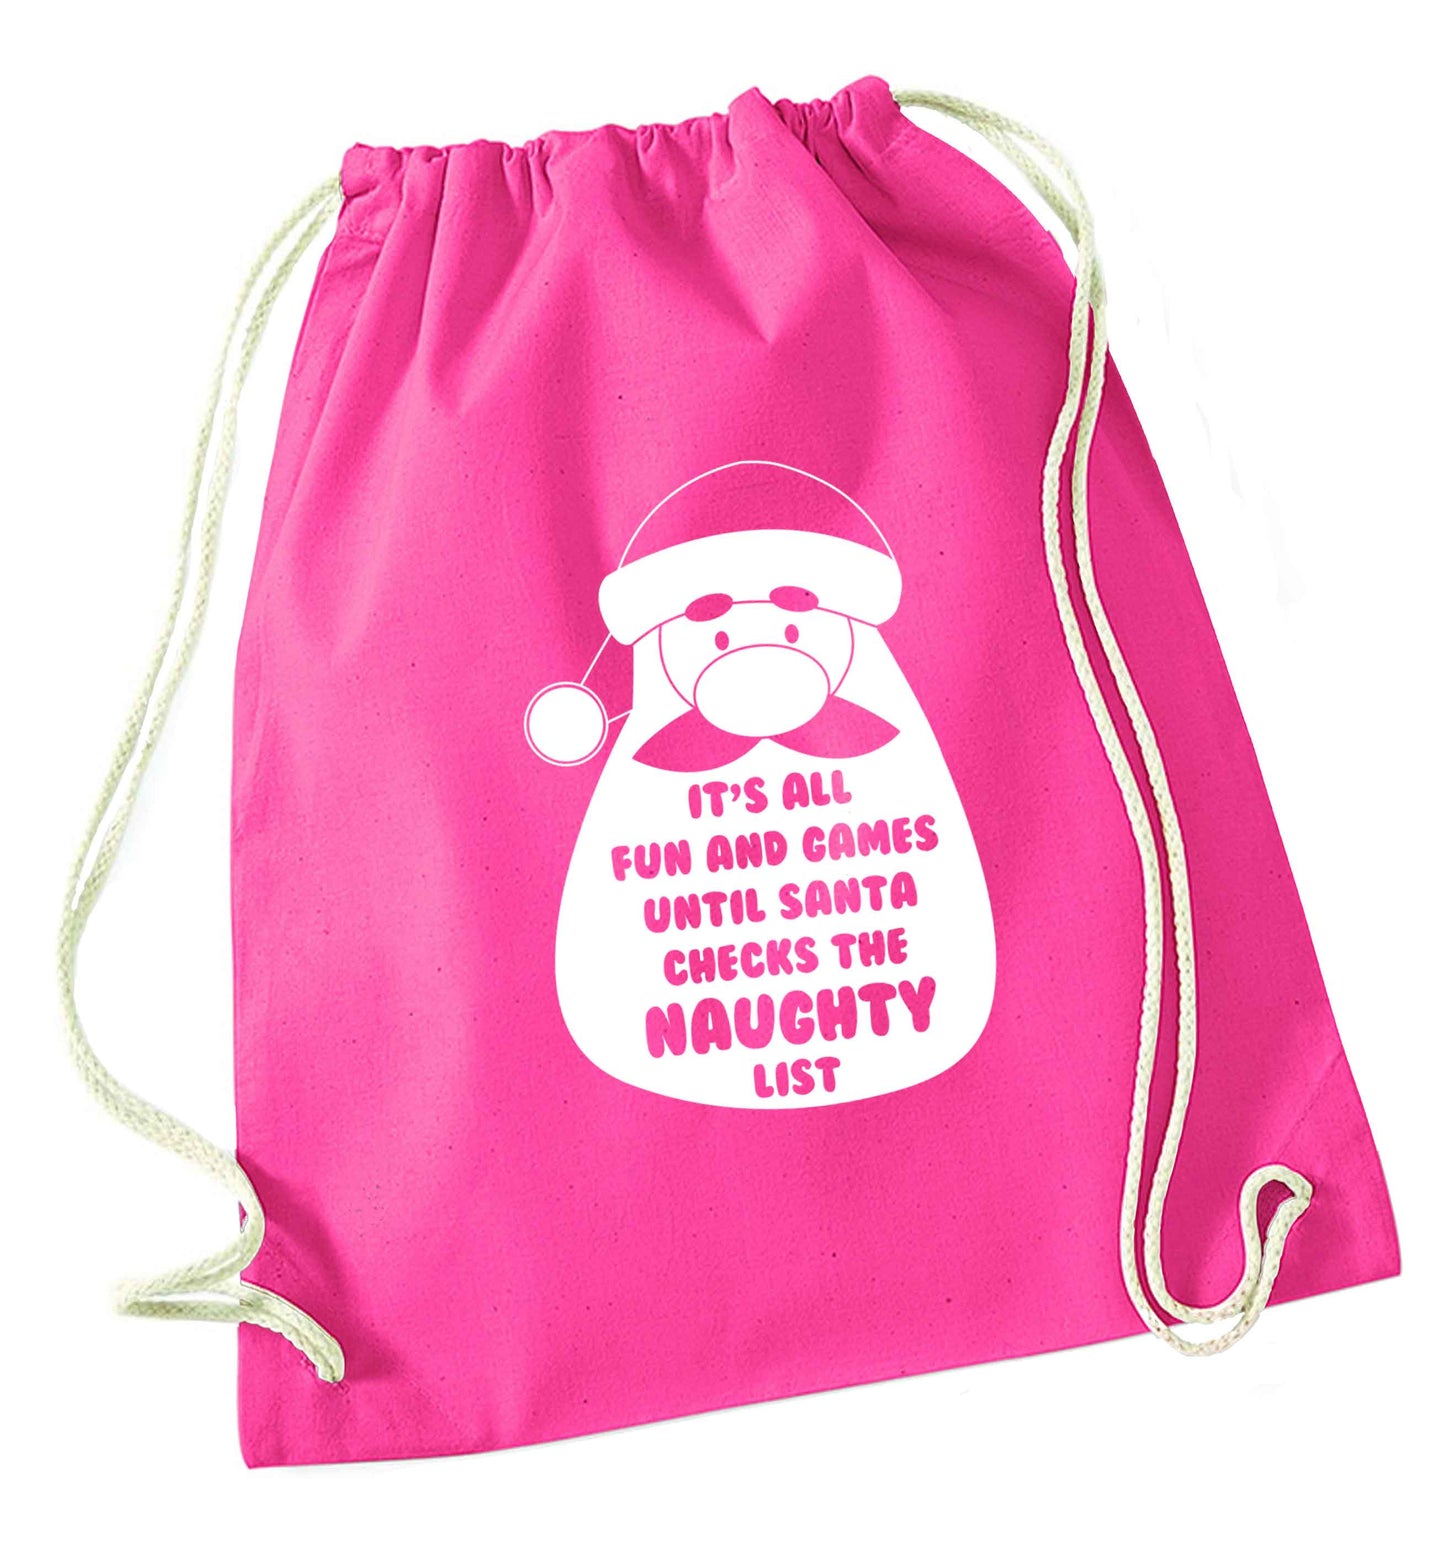 It's all fun and games until Santa checks the naughty list pink drawstring bag